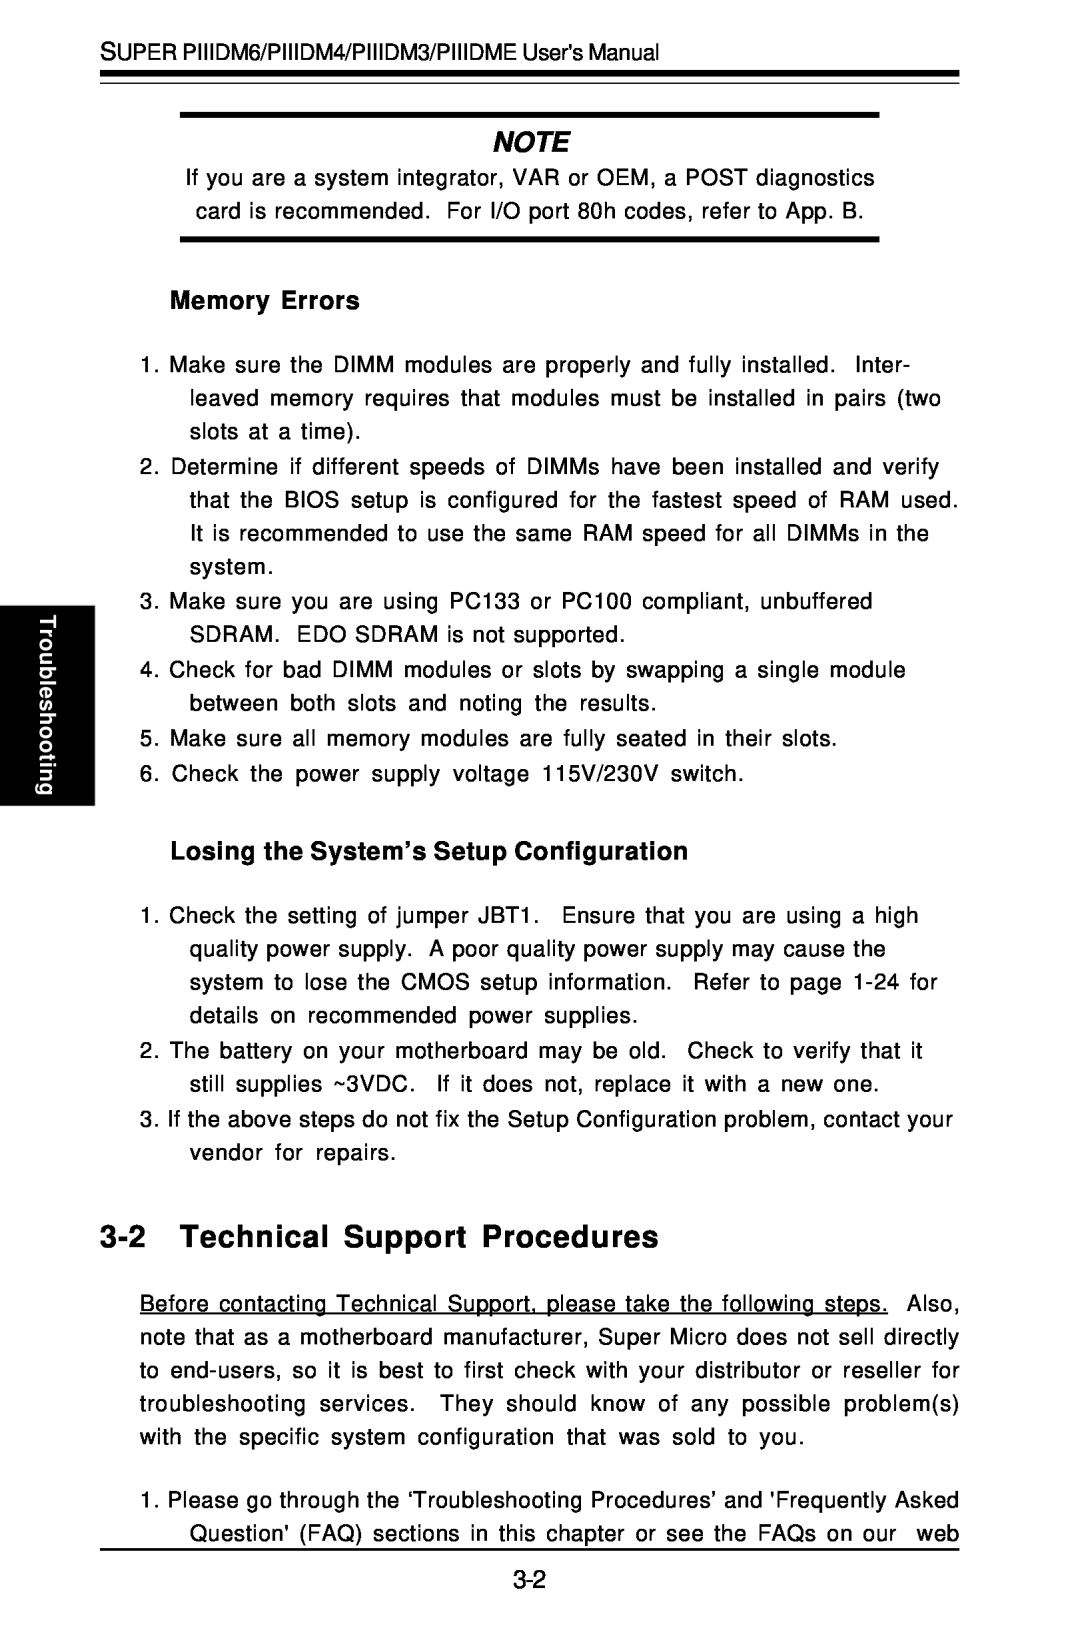 SUPER MICRO Computer Super PIIIDM3 Technical Support Procedures, Memory Errors, Losing the System’s Setup Configuration 